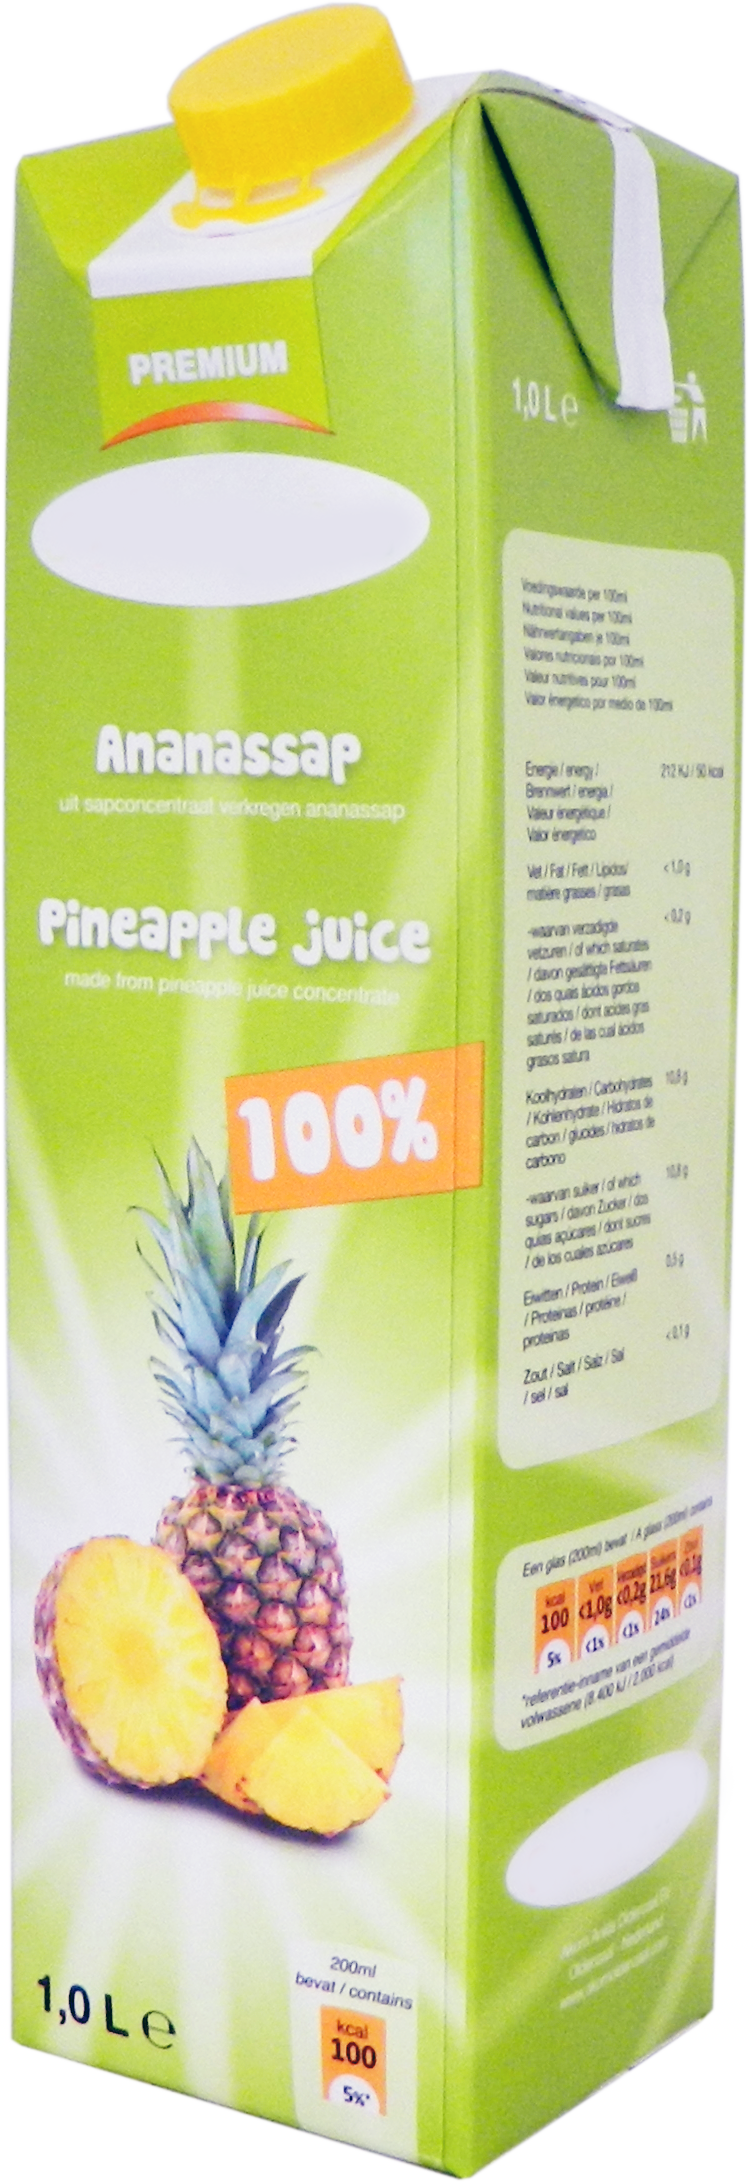 Premium Ananassaft 1,0 Liter